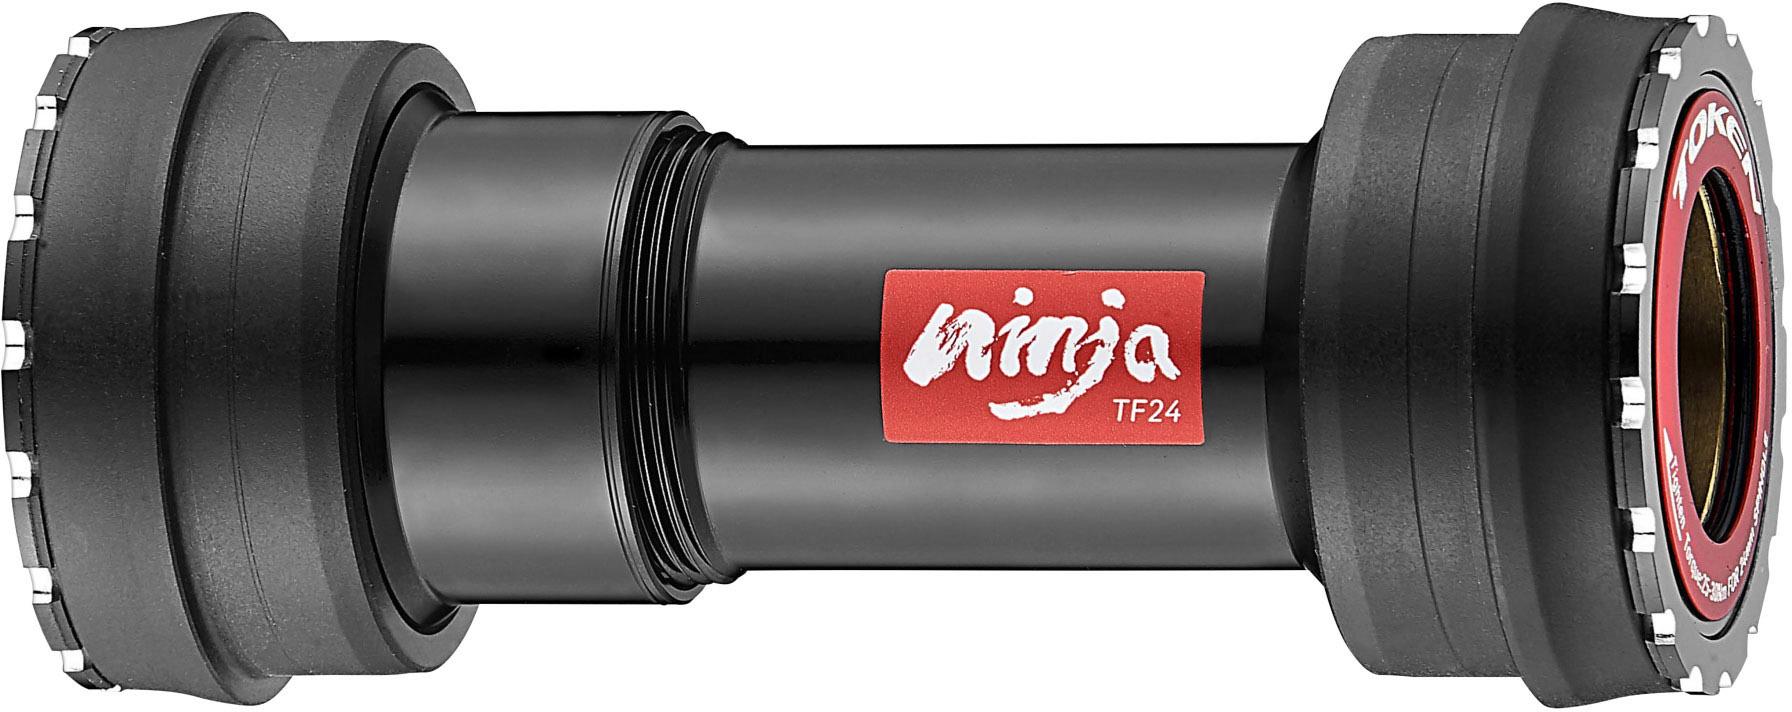 Token Ninja Bb30 Frame Shimano Bottom Bracket  Black